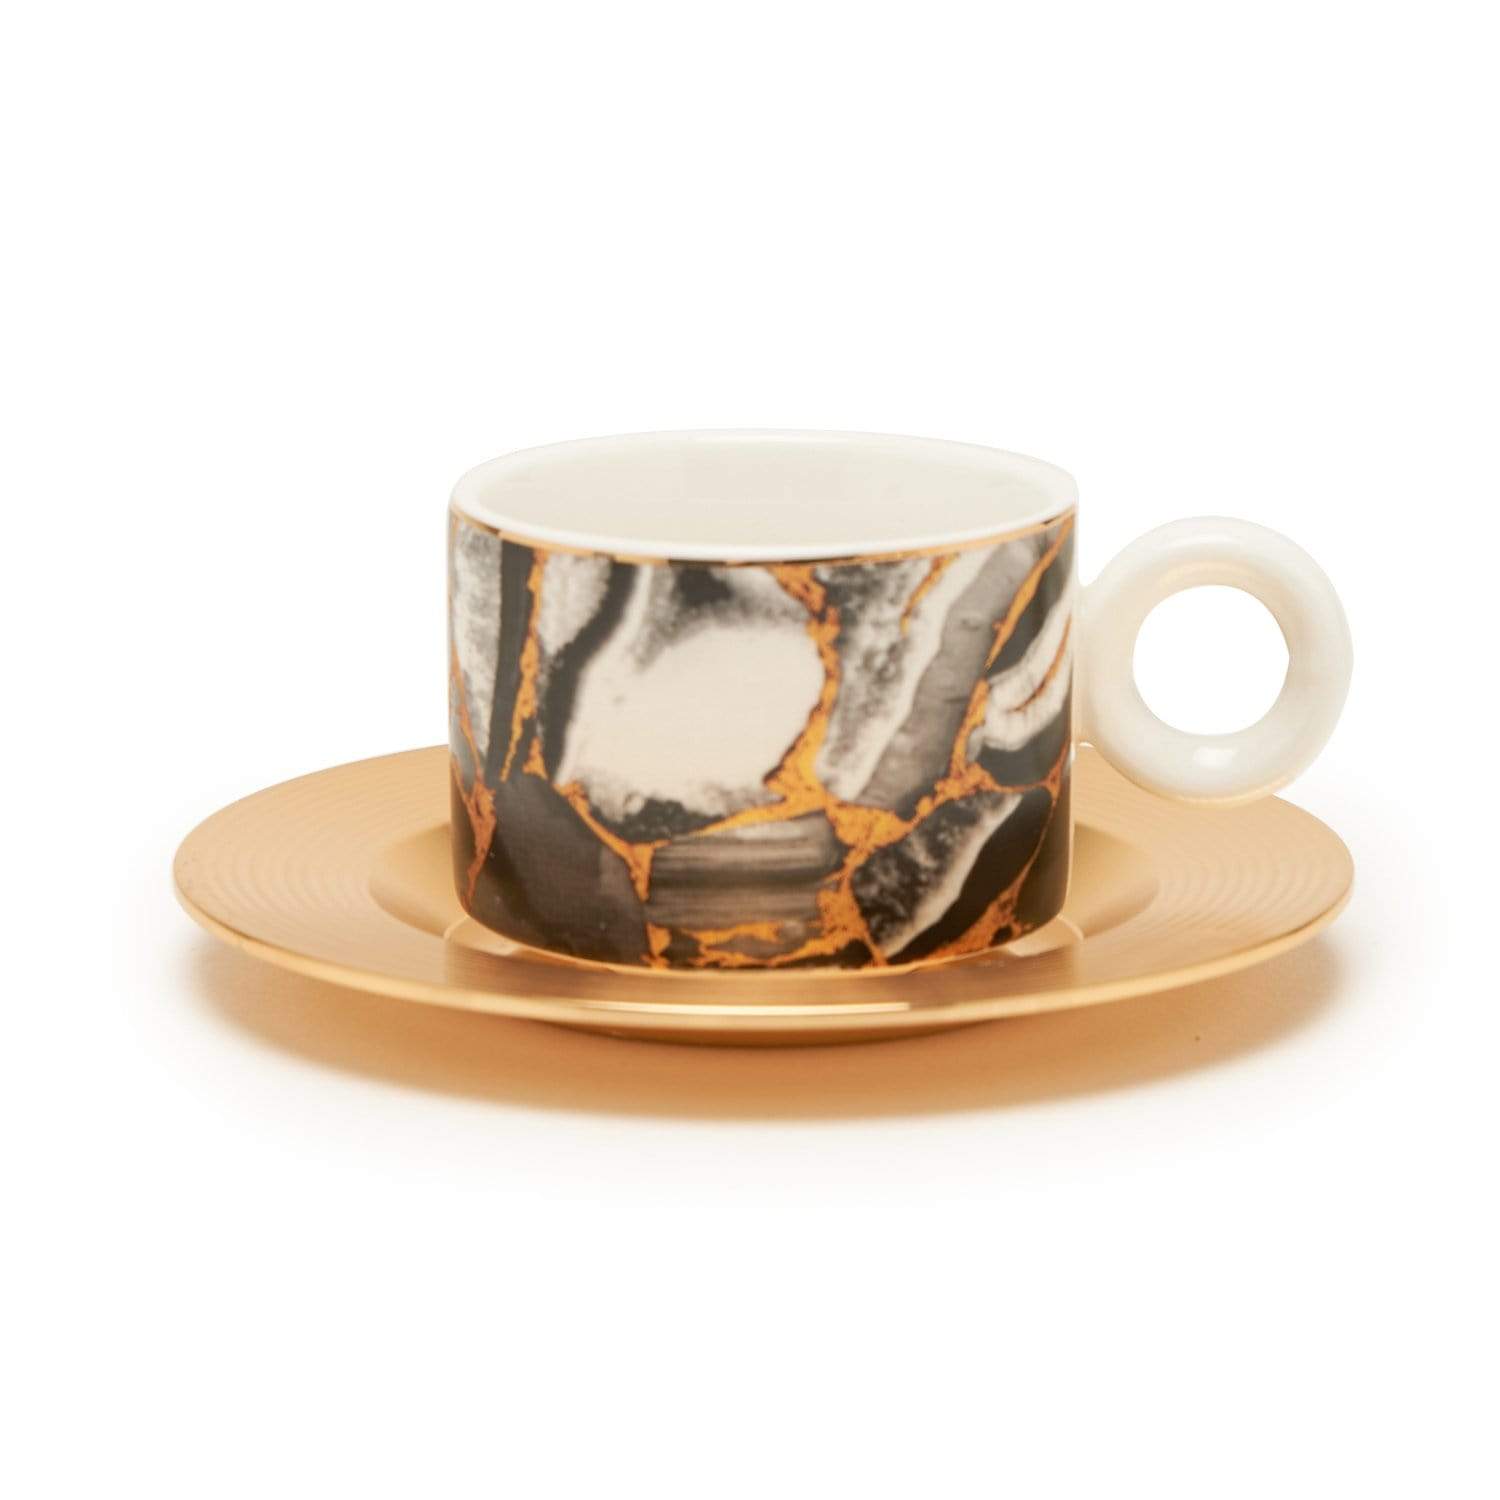 AMBER MARLENE GOLD 12PC SET COFFEE CUP/SAUCER - AM3489-90-S12-MAR